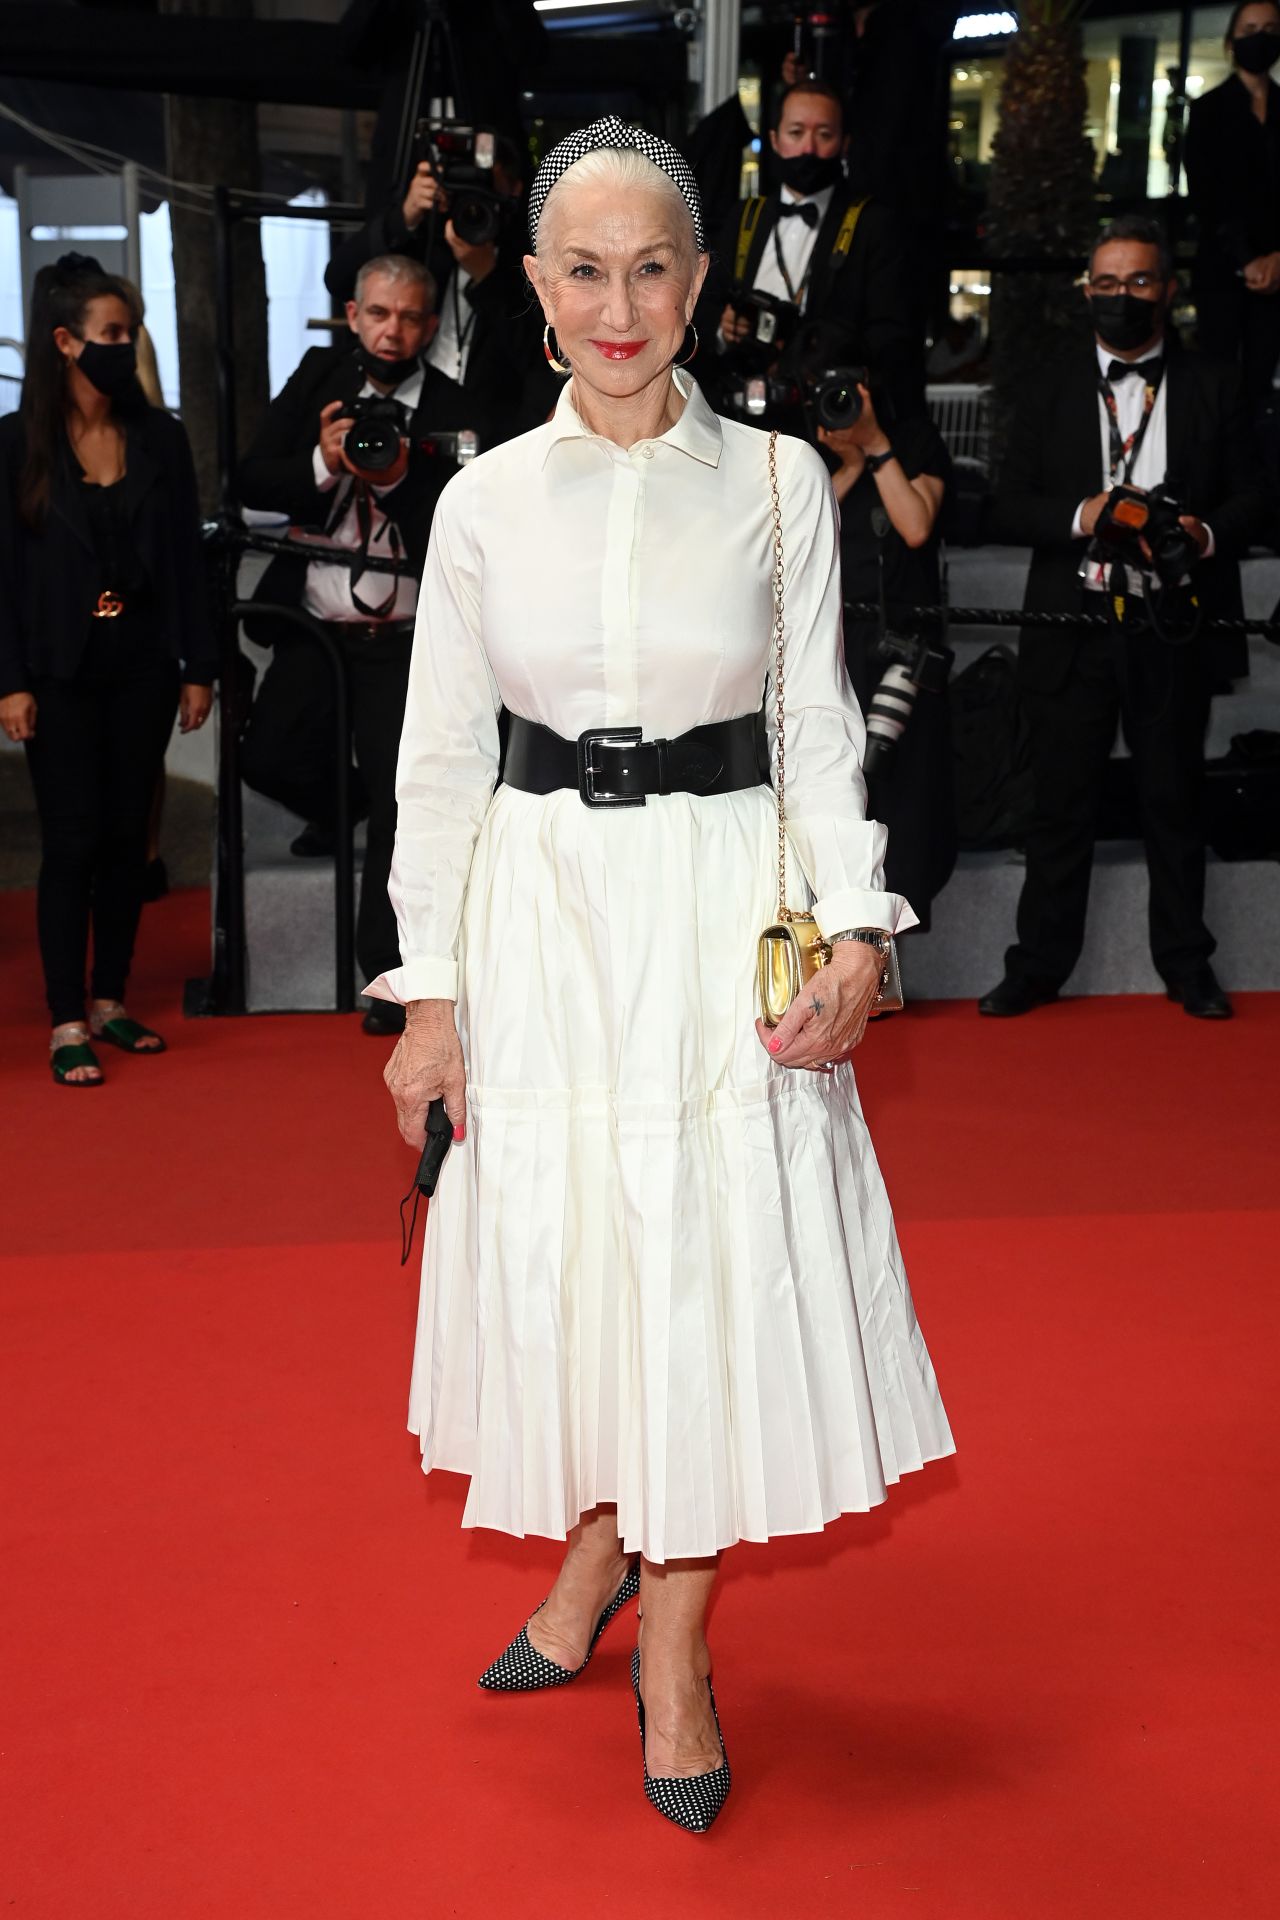 Dame Helen Mirren walked the red carpet in a white Carolina Herrera shirt-dress cinched at the waist.